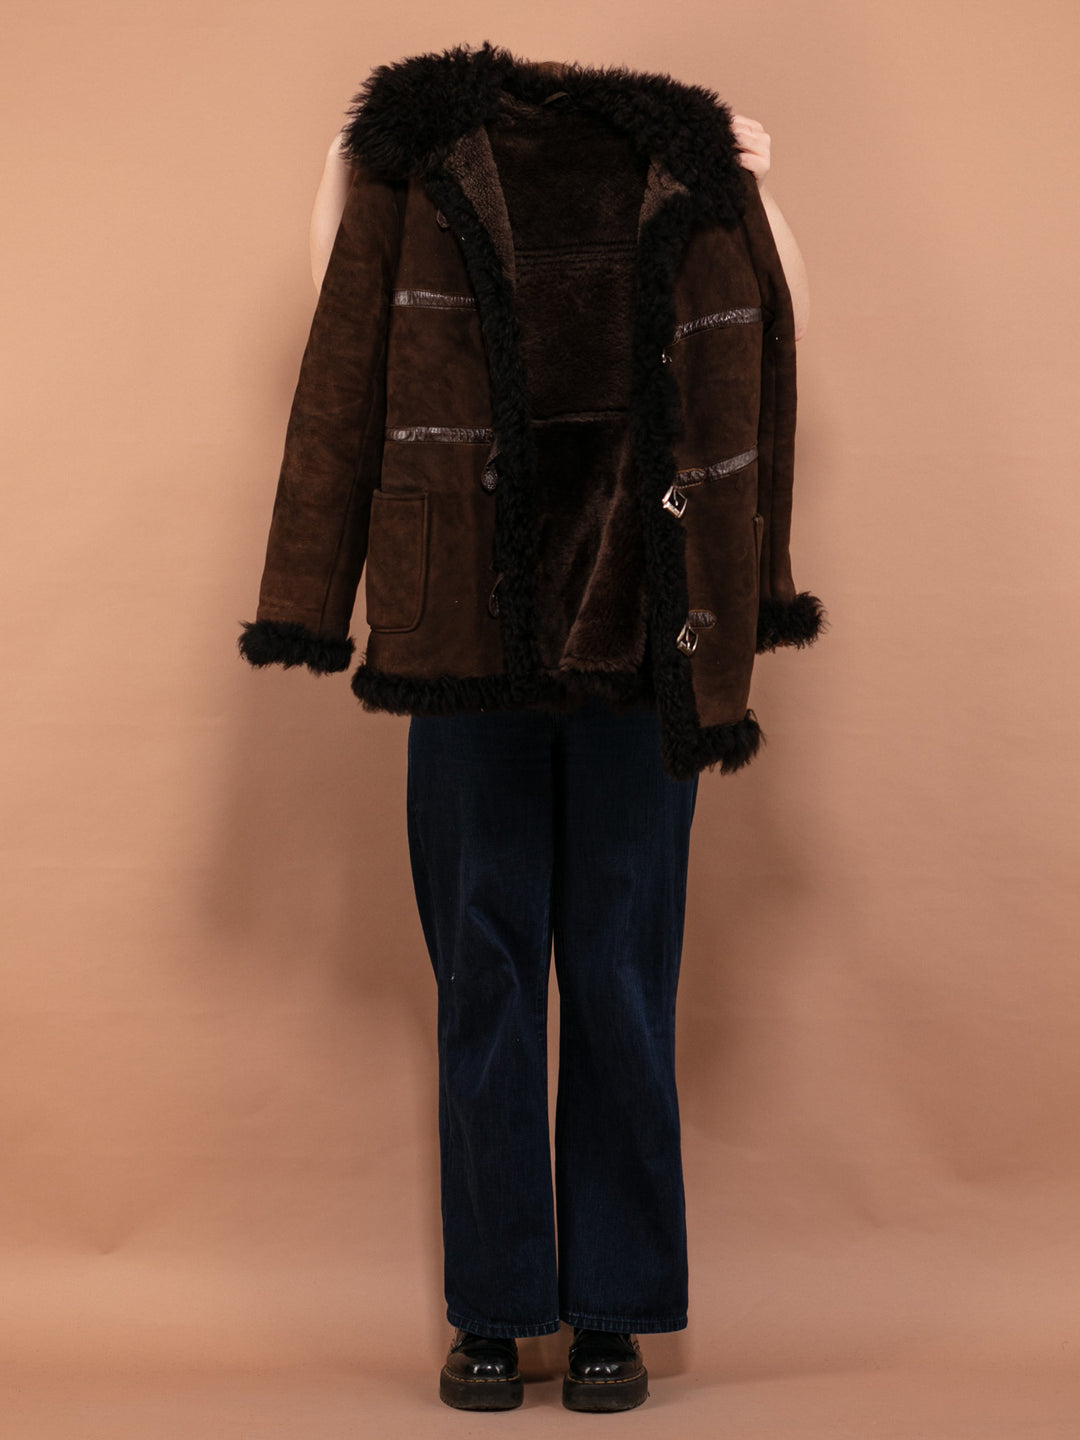 Penny Lane Sheepskin Coat 70's, Size S Small, Vintage Brown Suede Afghan Coat, Buckle Closure Boho Hippie Style Coat, Retro Fur Trim Coat